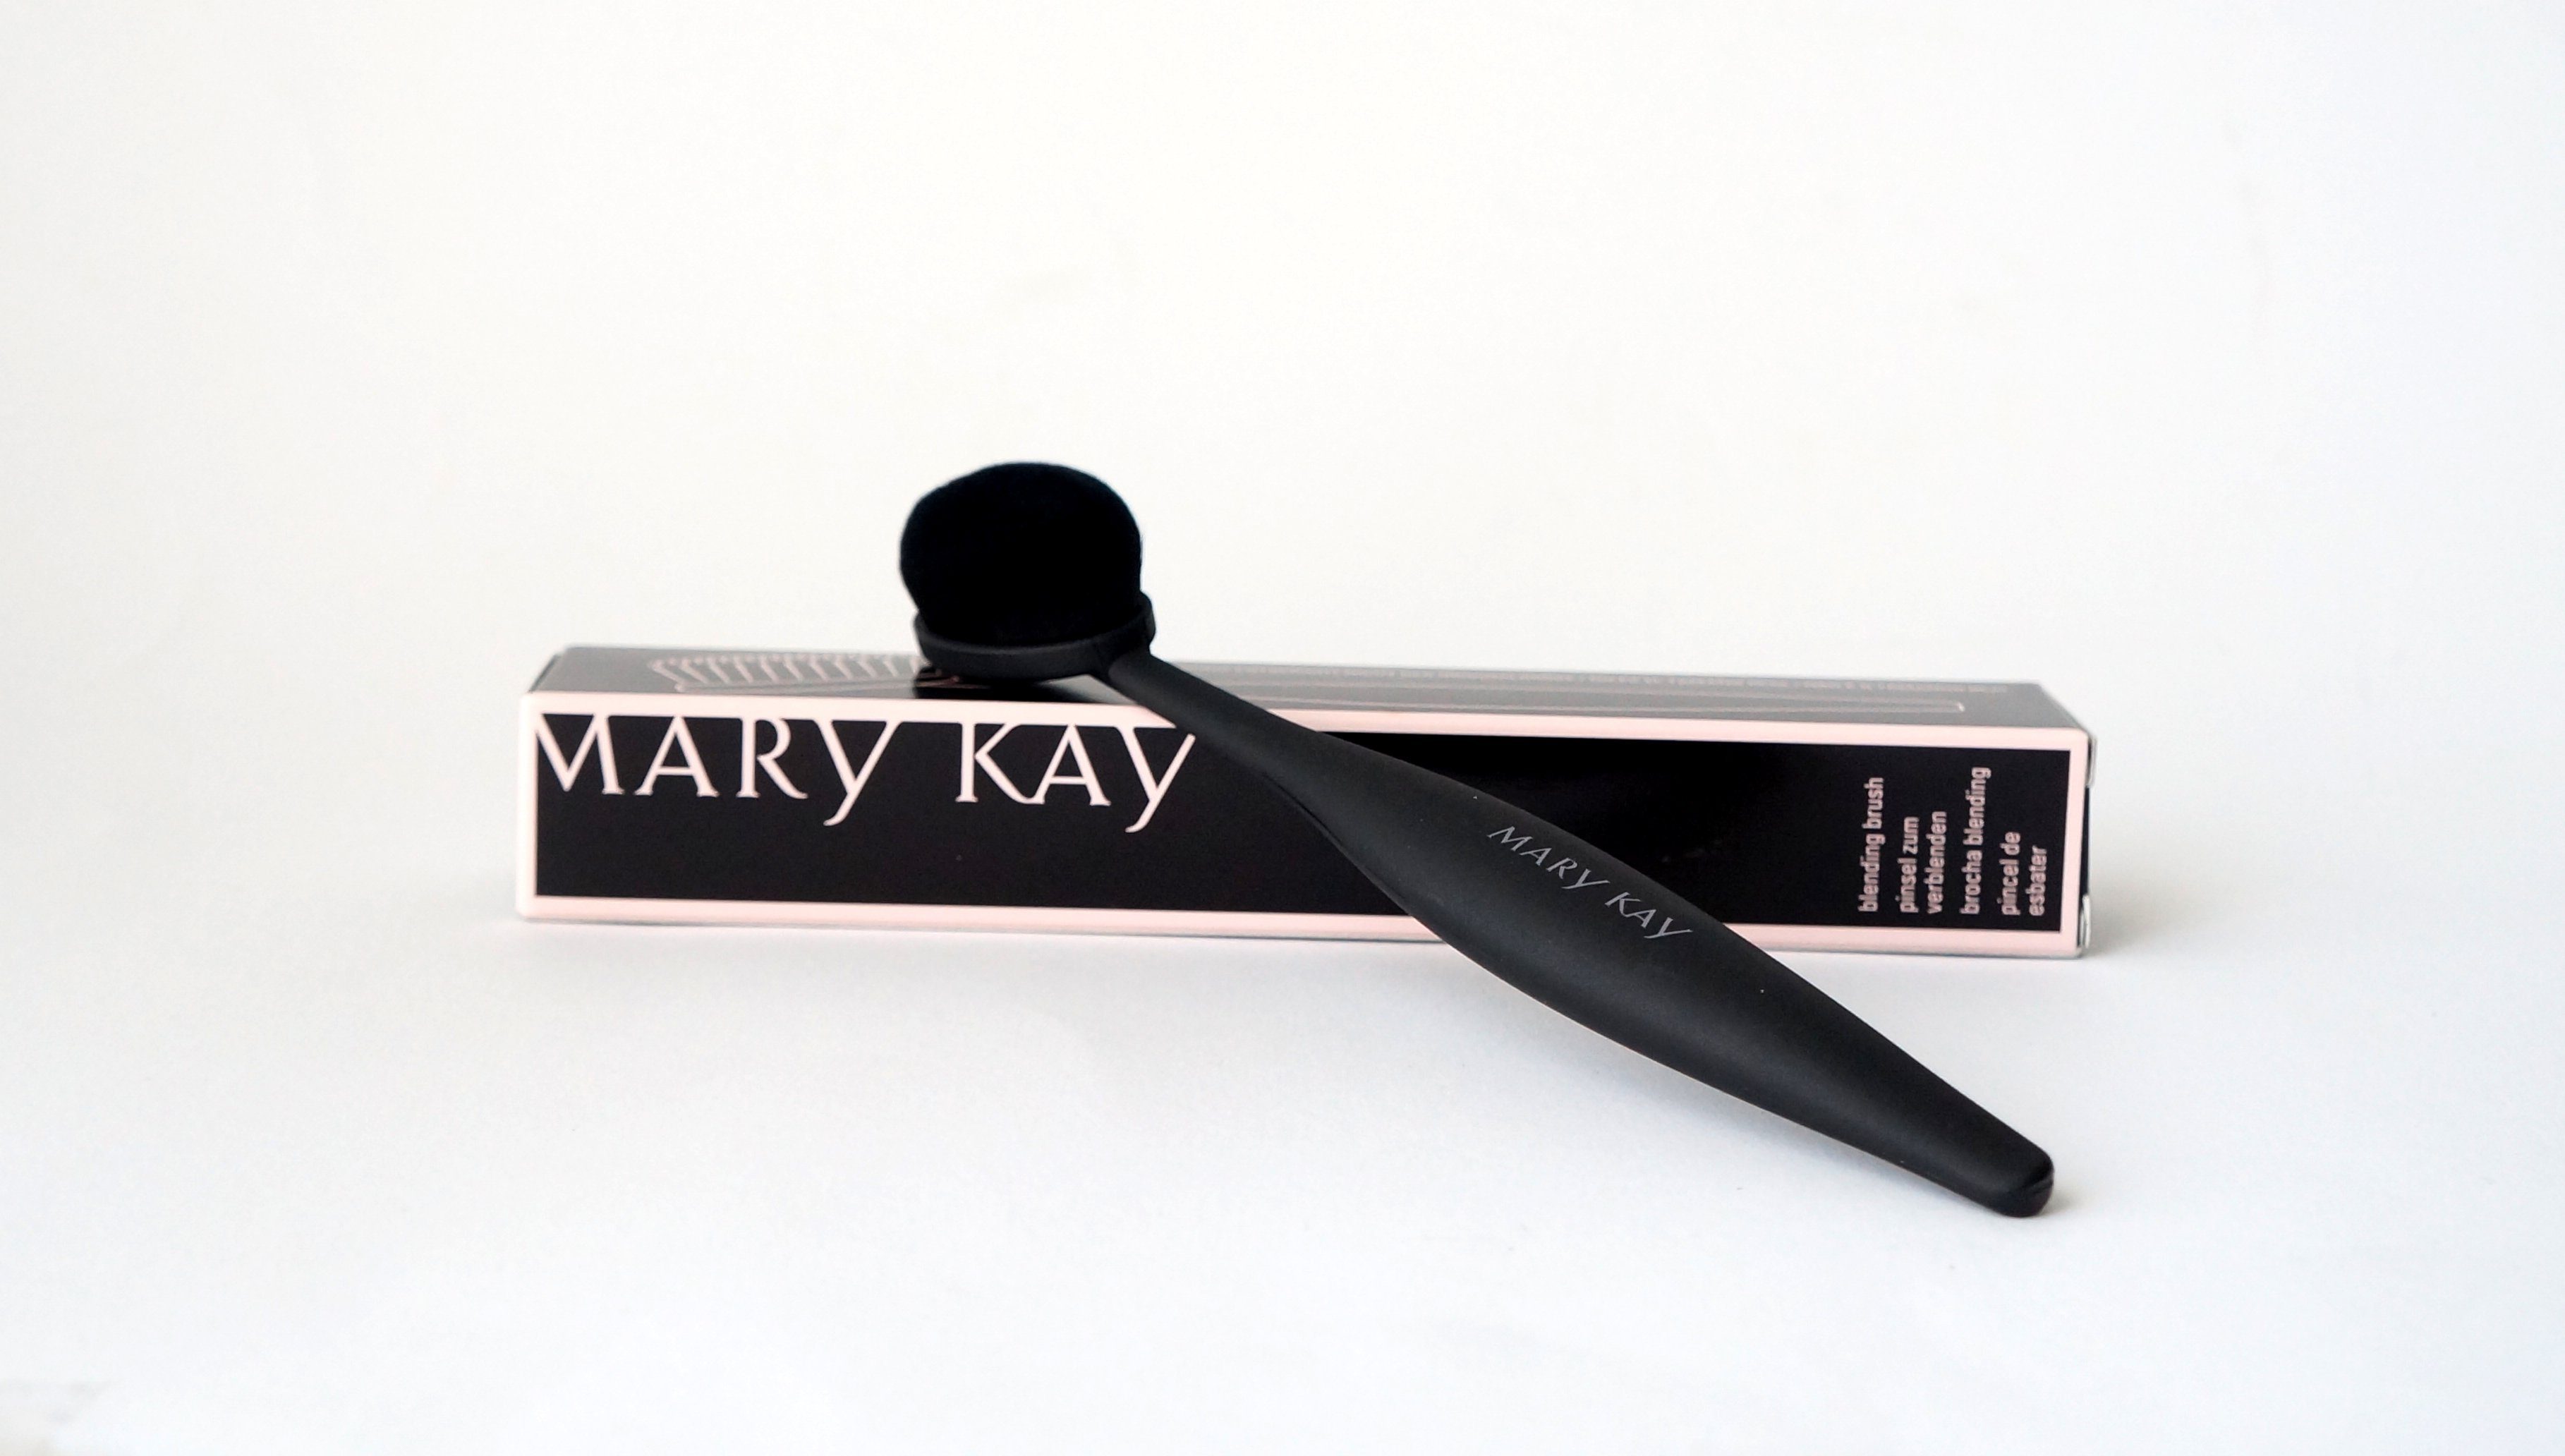 Mary Kay Foundationpinsel »Mary Kay Blending Brush Pinsel zum verblenden«,  1 tlg. online kaufen | OTTO